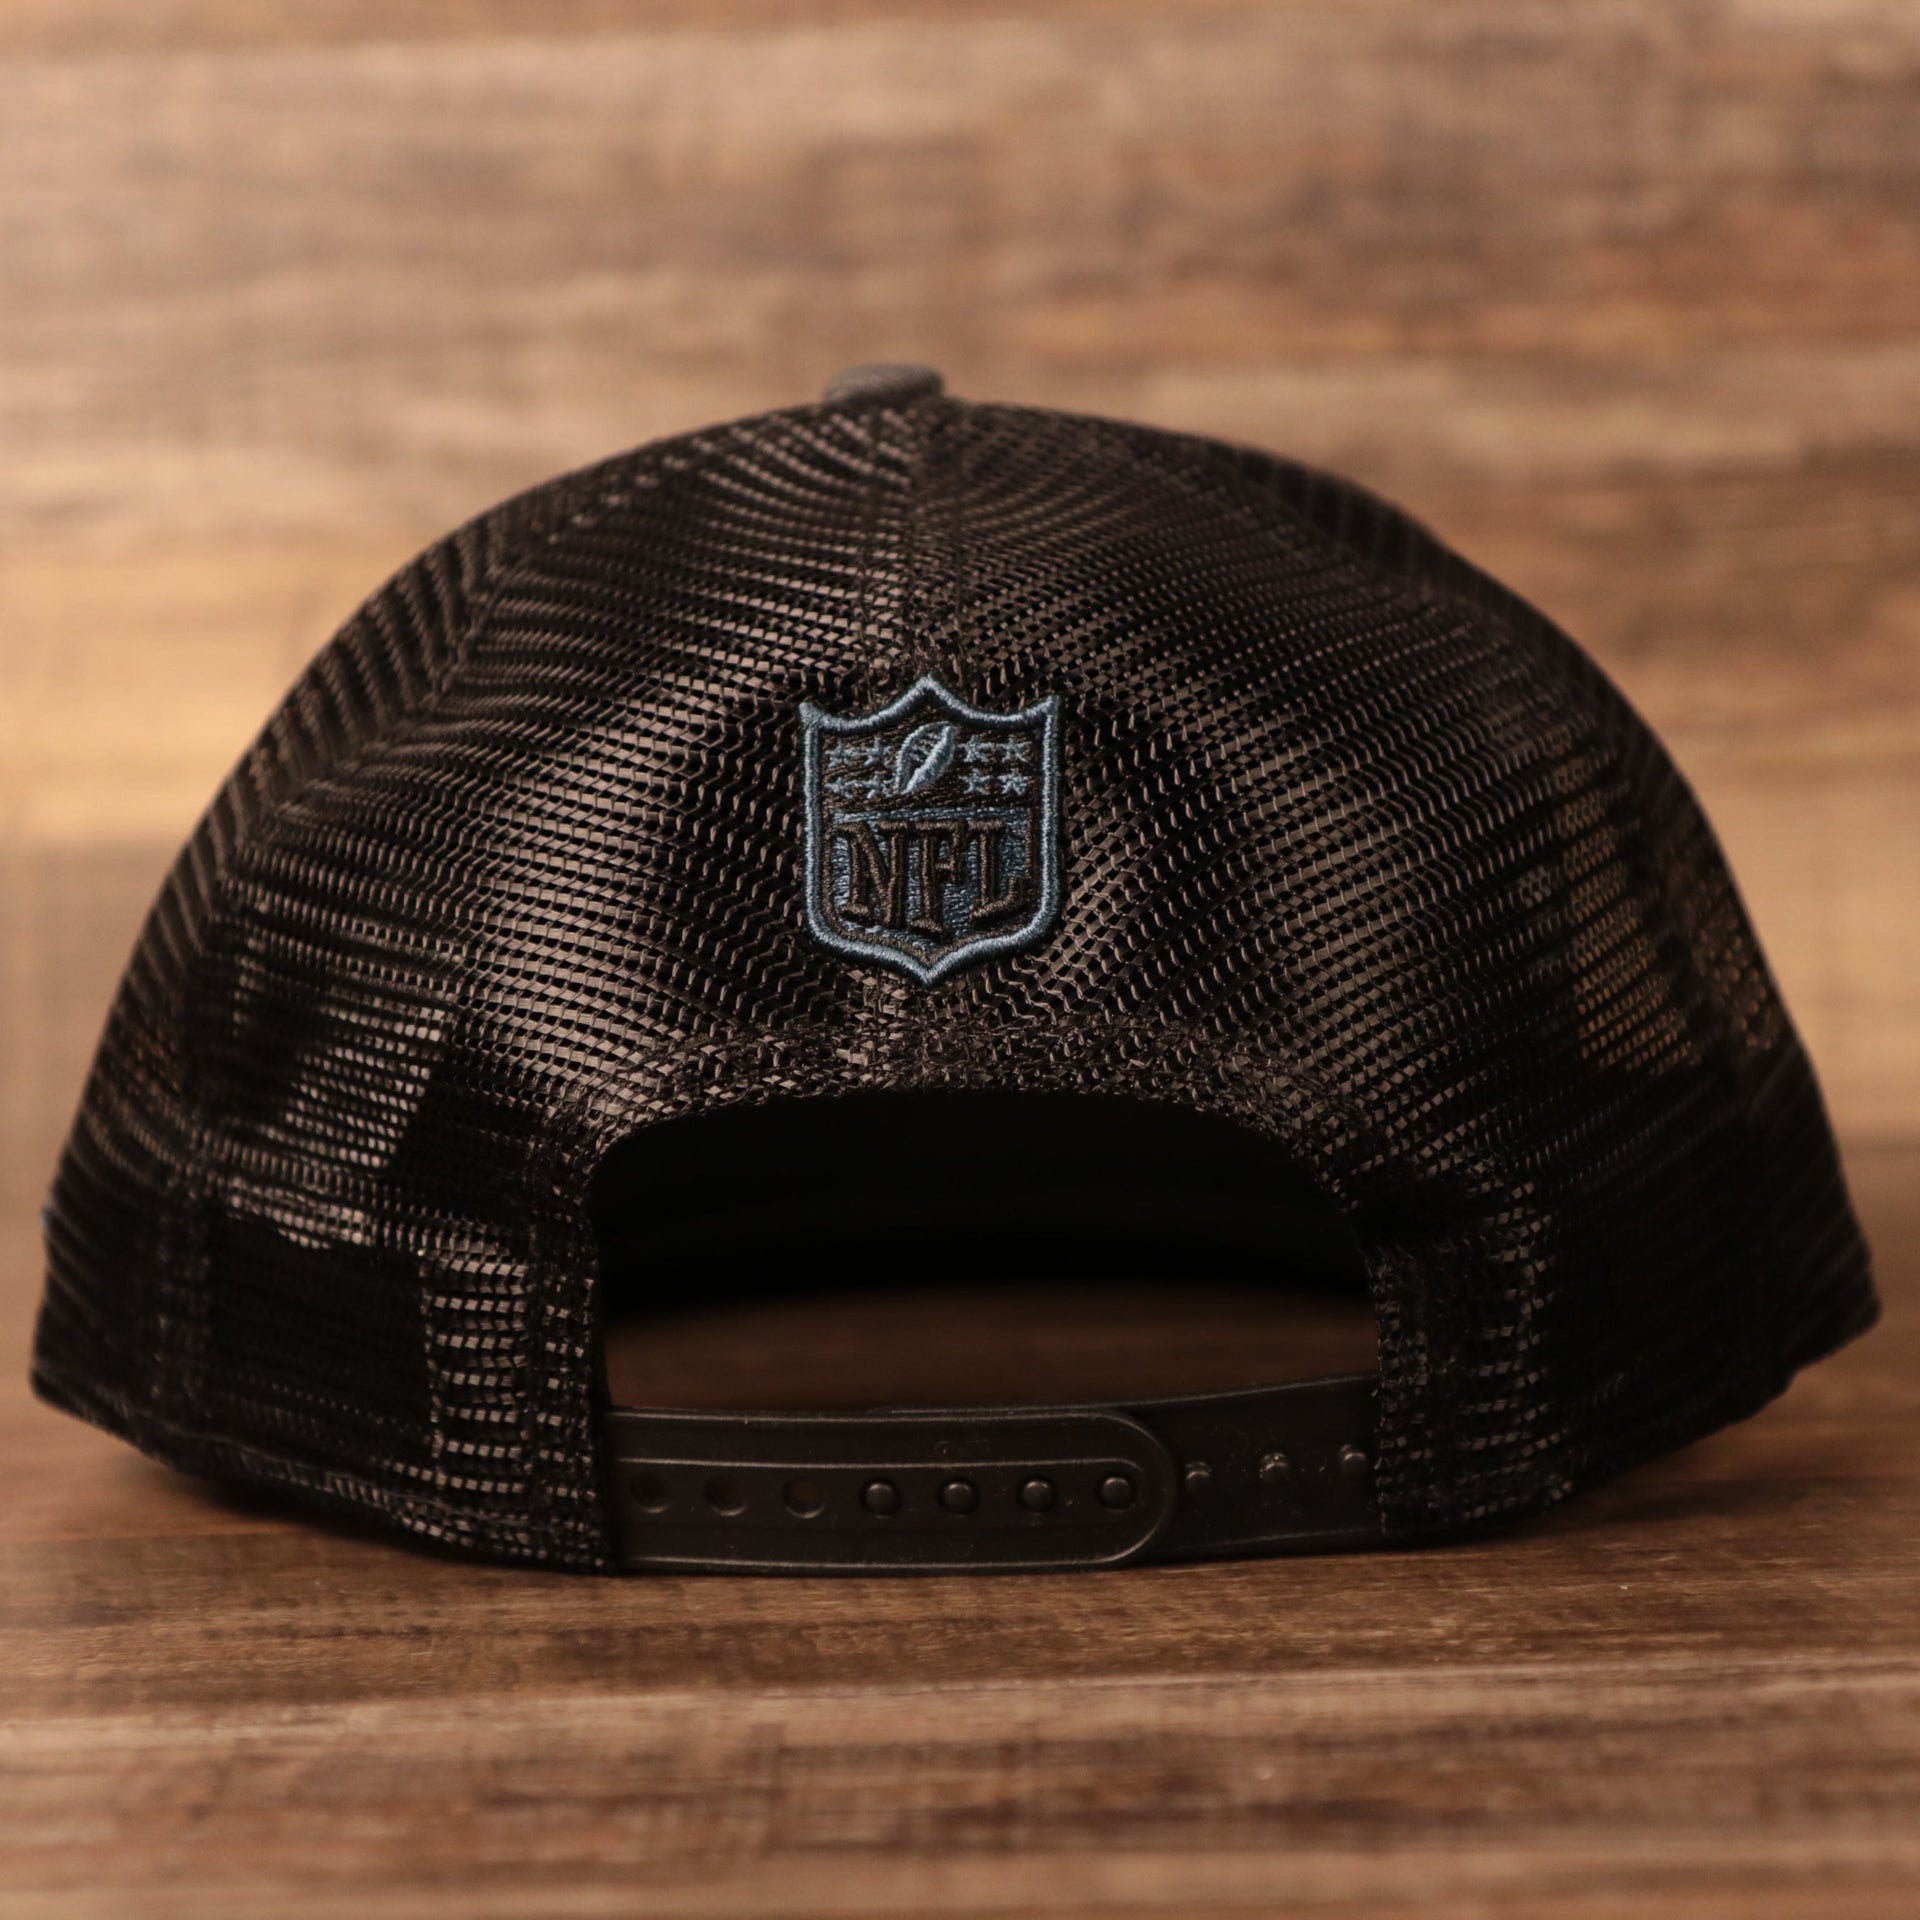 The NFL logo on the back of the Philadelphia Eagles official 20201 NFL draft hat.